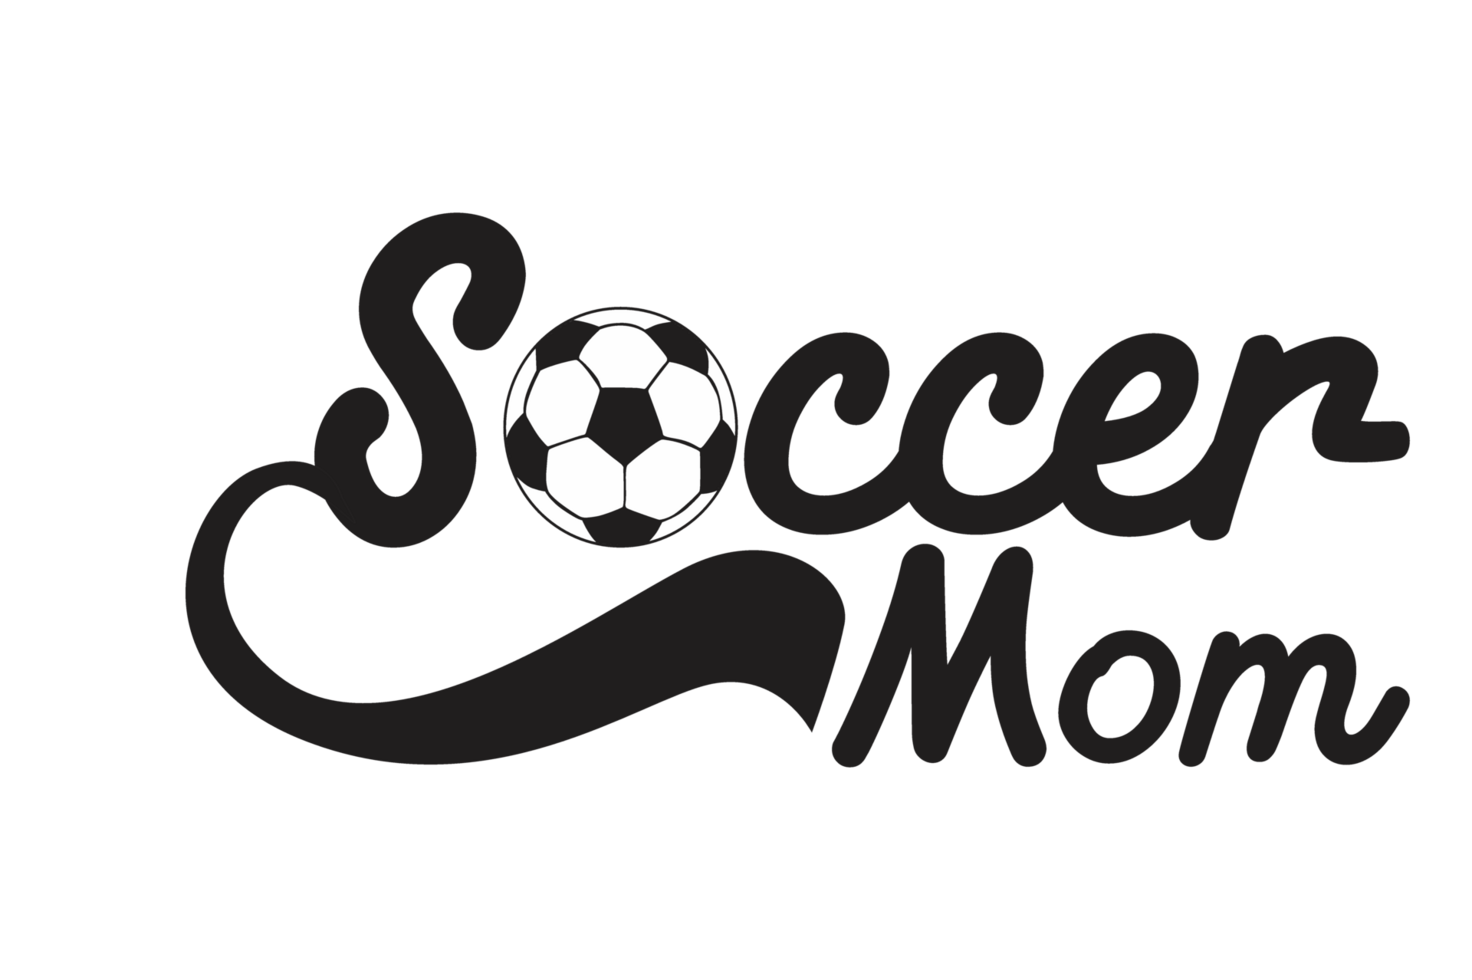 Soccer Design with Transparent Background png